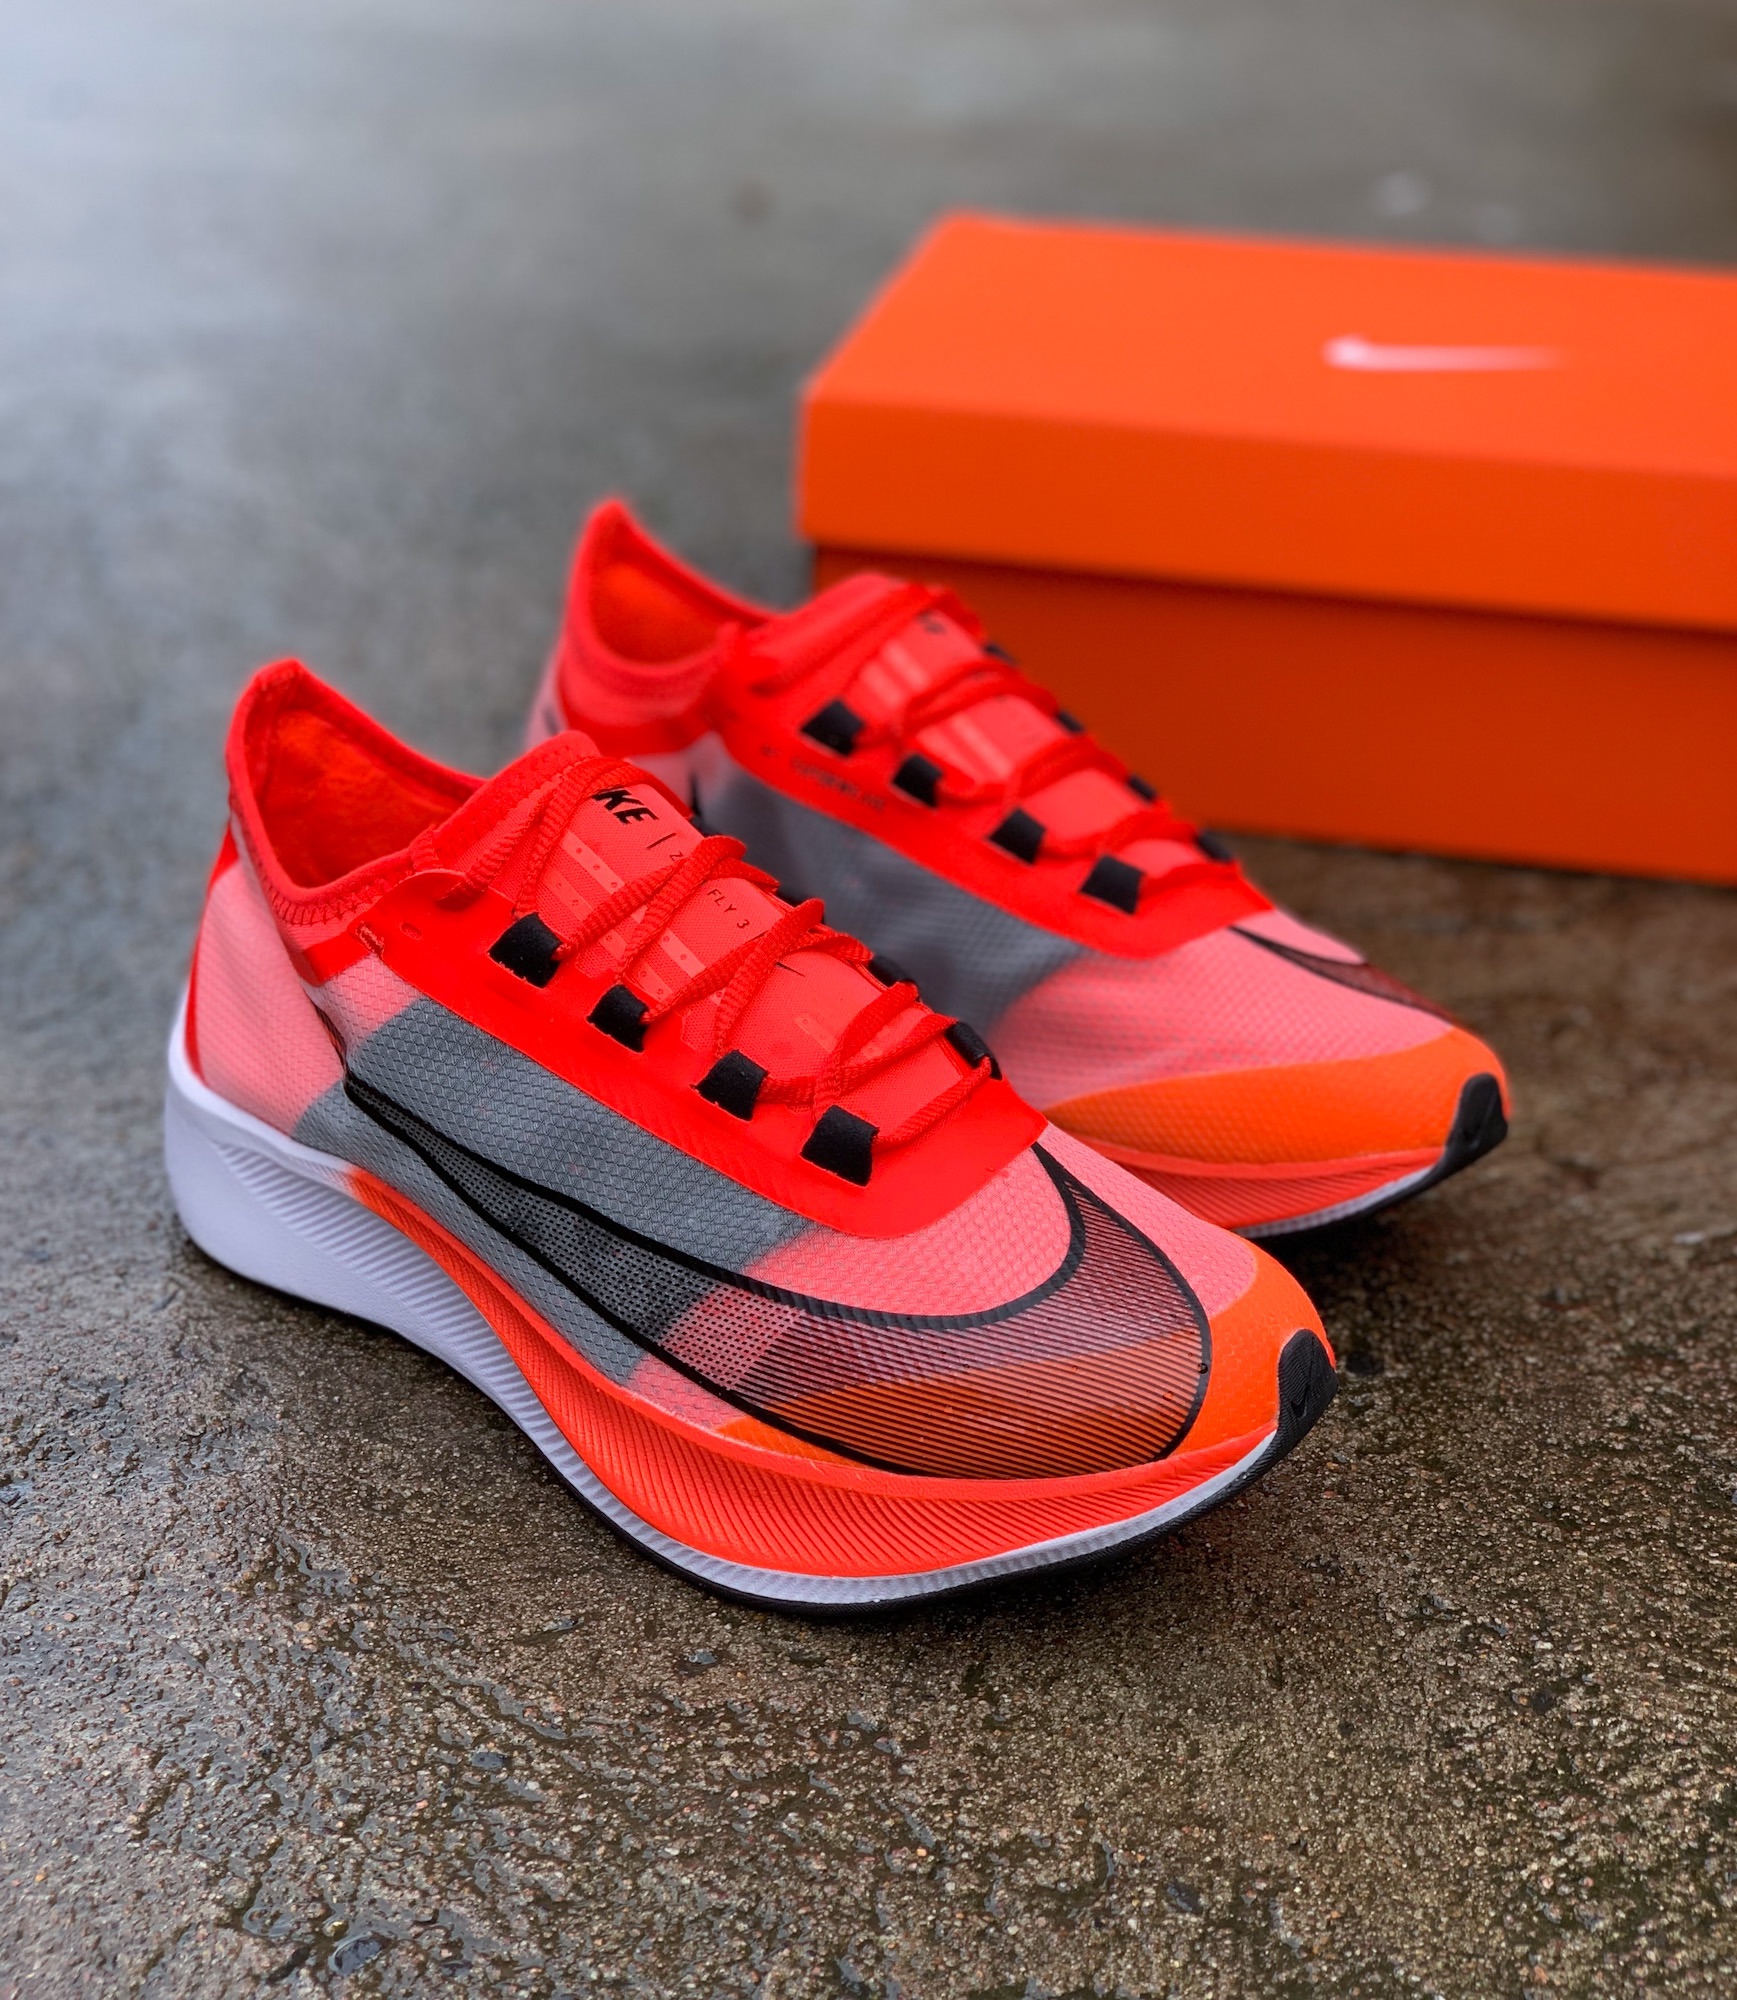 Nike Zoom Fly 3 รองเท้าผ้าใบวิ่งมีของพร้อมส่งงานแกรด Hiend มีsize 40-45ใส่ได้ทั้งผู้ชายและผู้หญิงมีอ